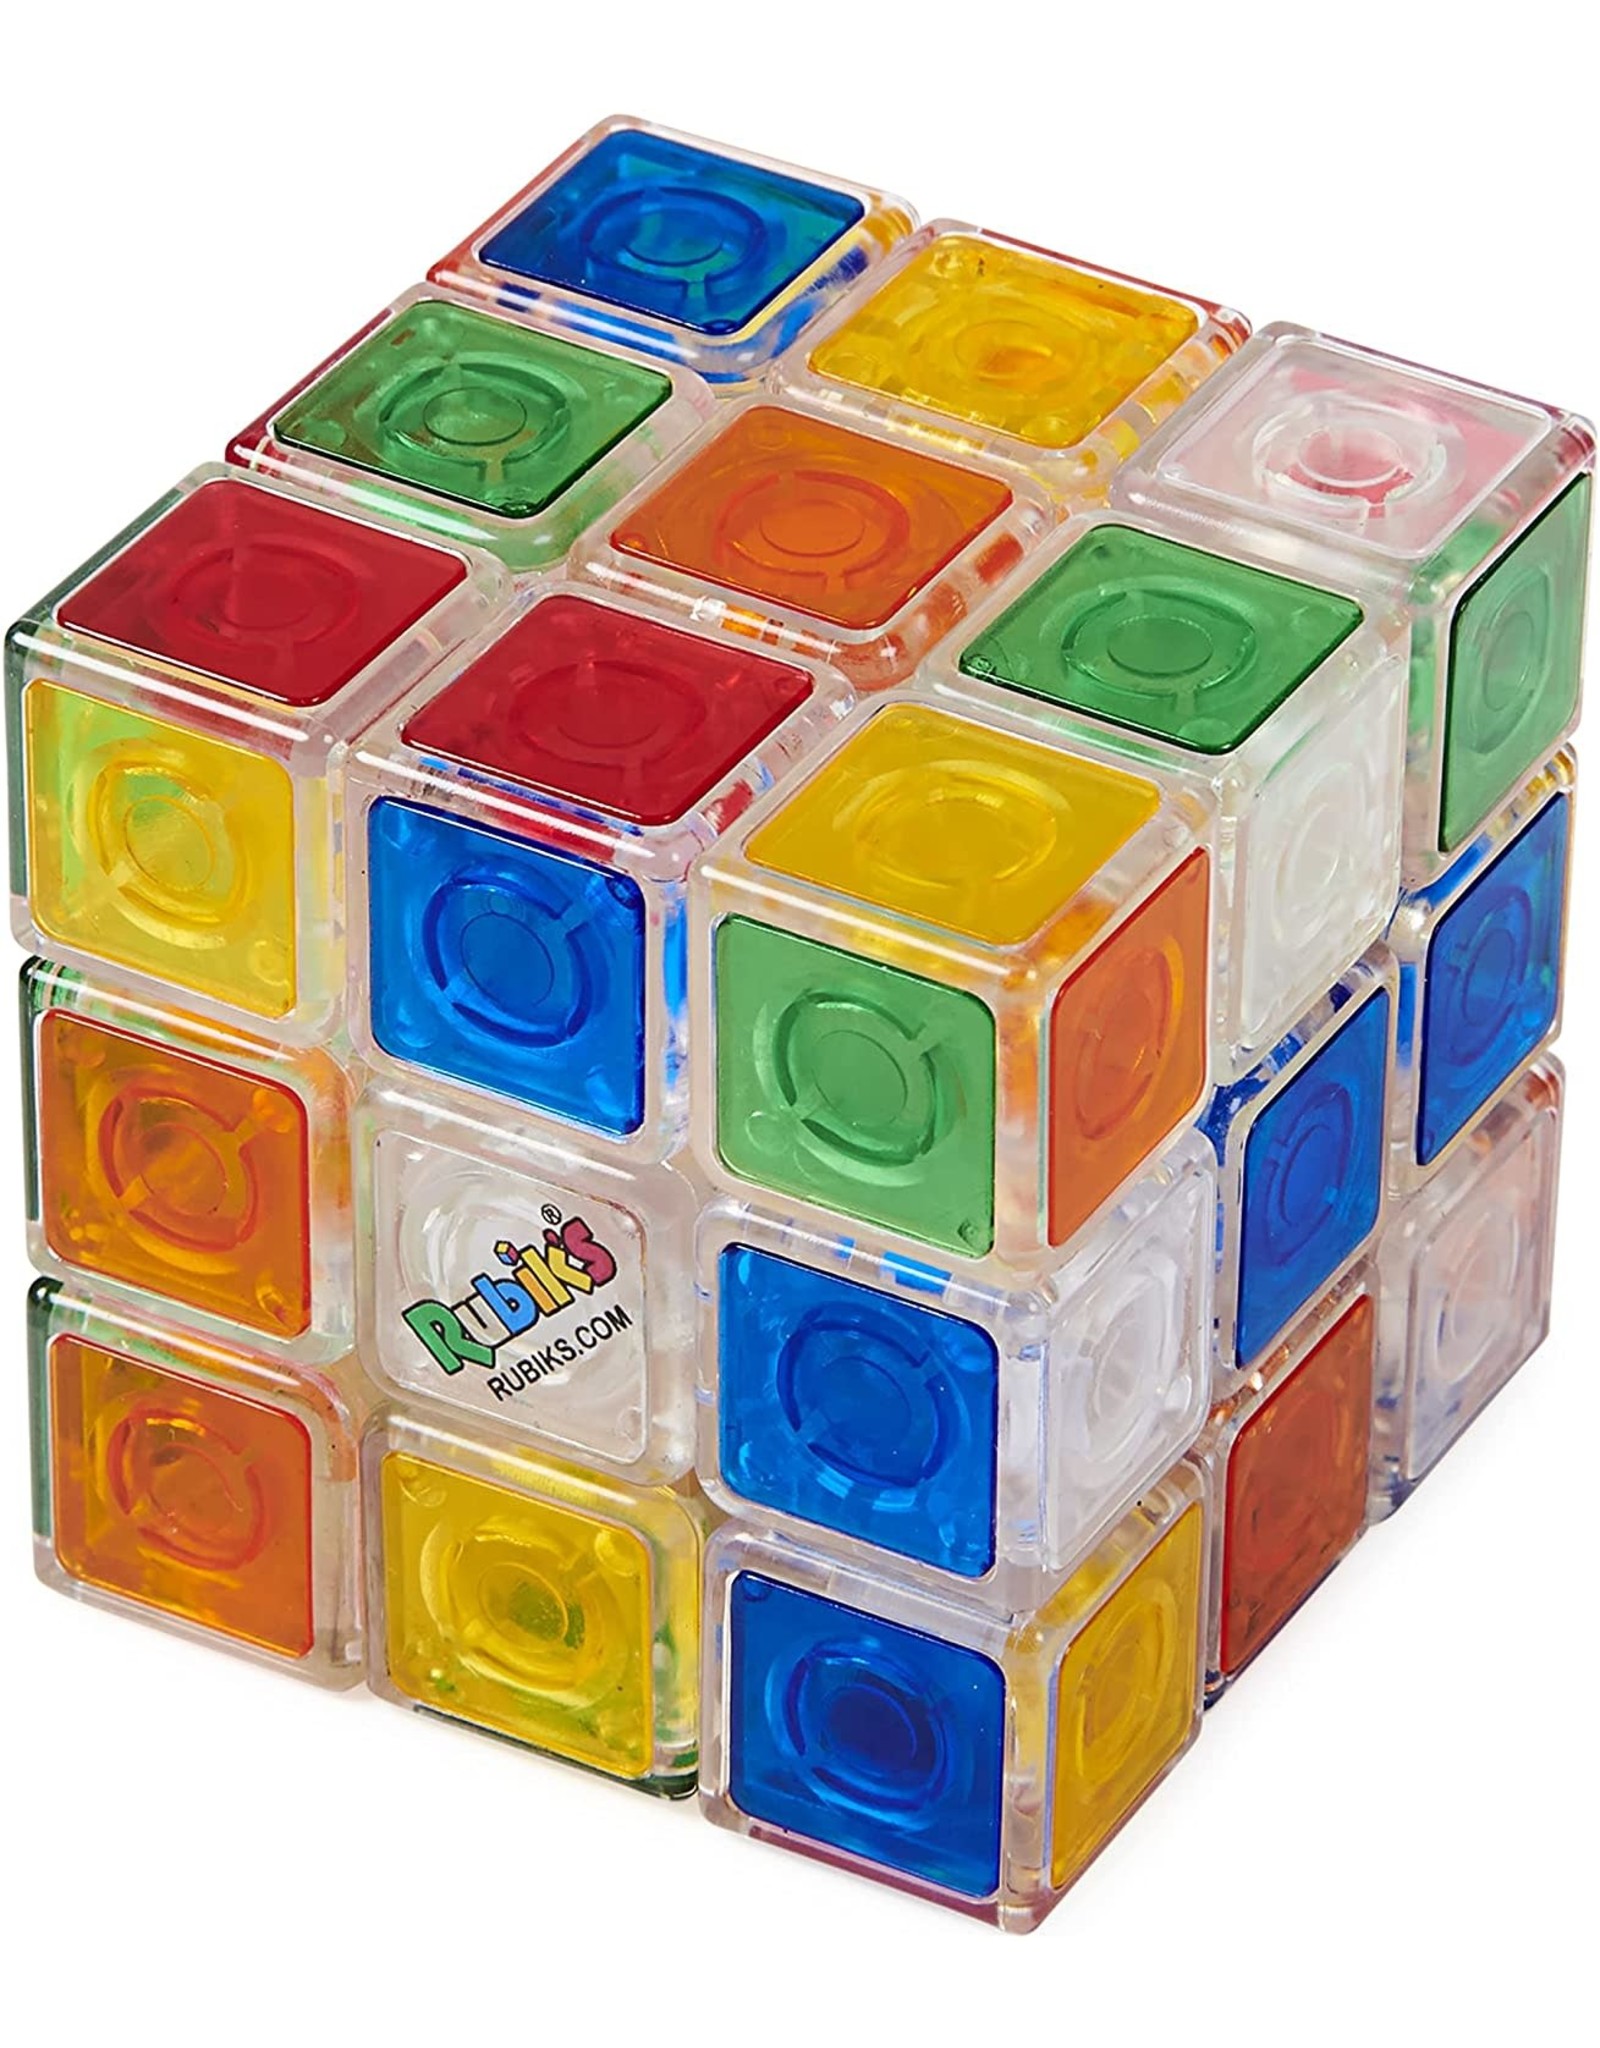 Rubik's Rubik's Crystal